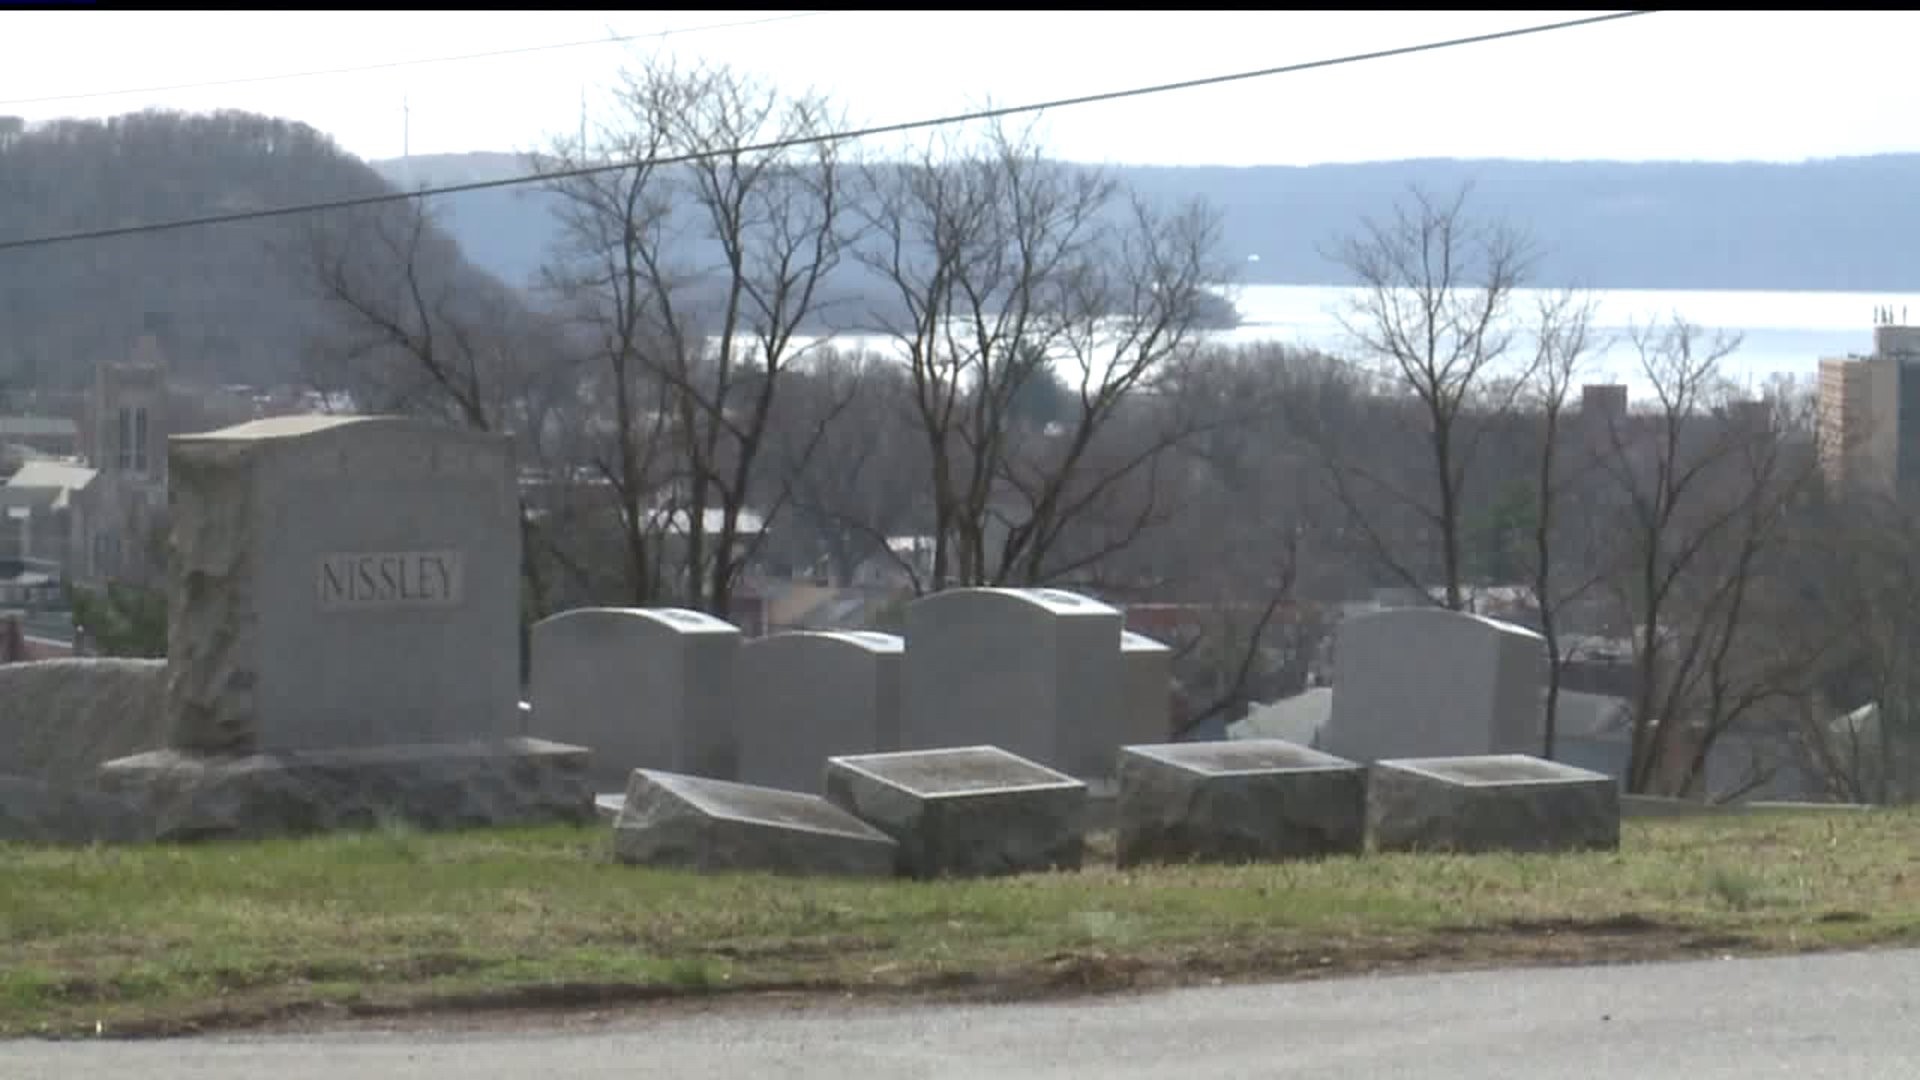 Man pockets memorial money in cemetery scam